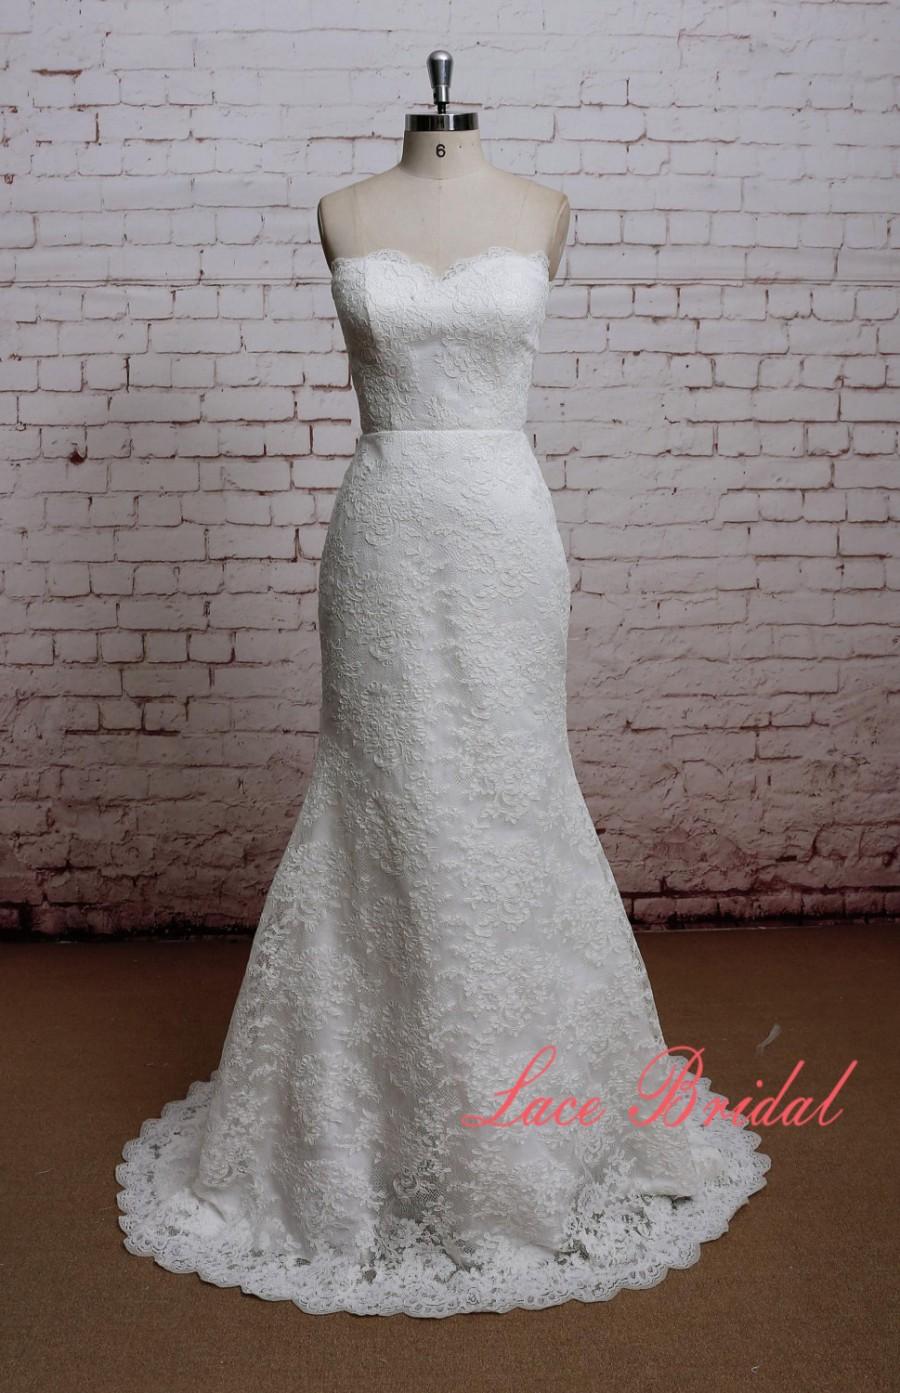 زفاف - New Style Wedding Dress Mermaid Style Bridal Gown Classic Lace Wedding Gown Full Lace Skirt Dress